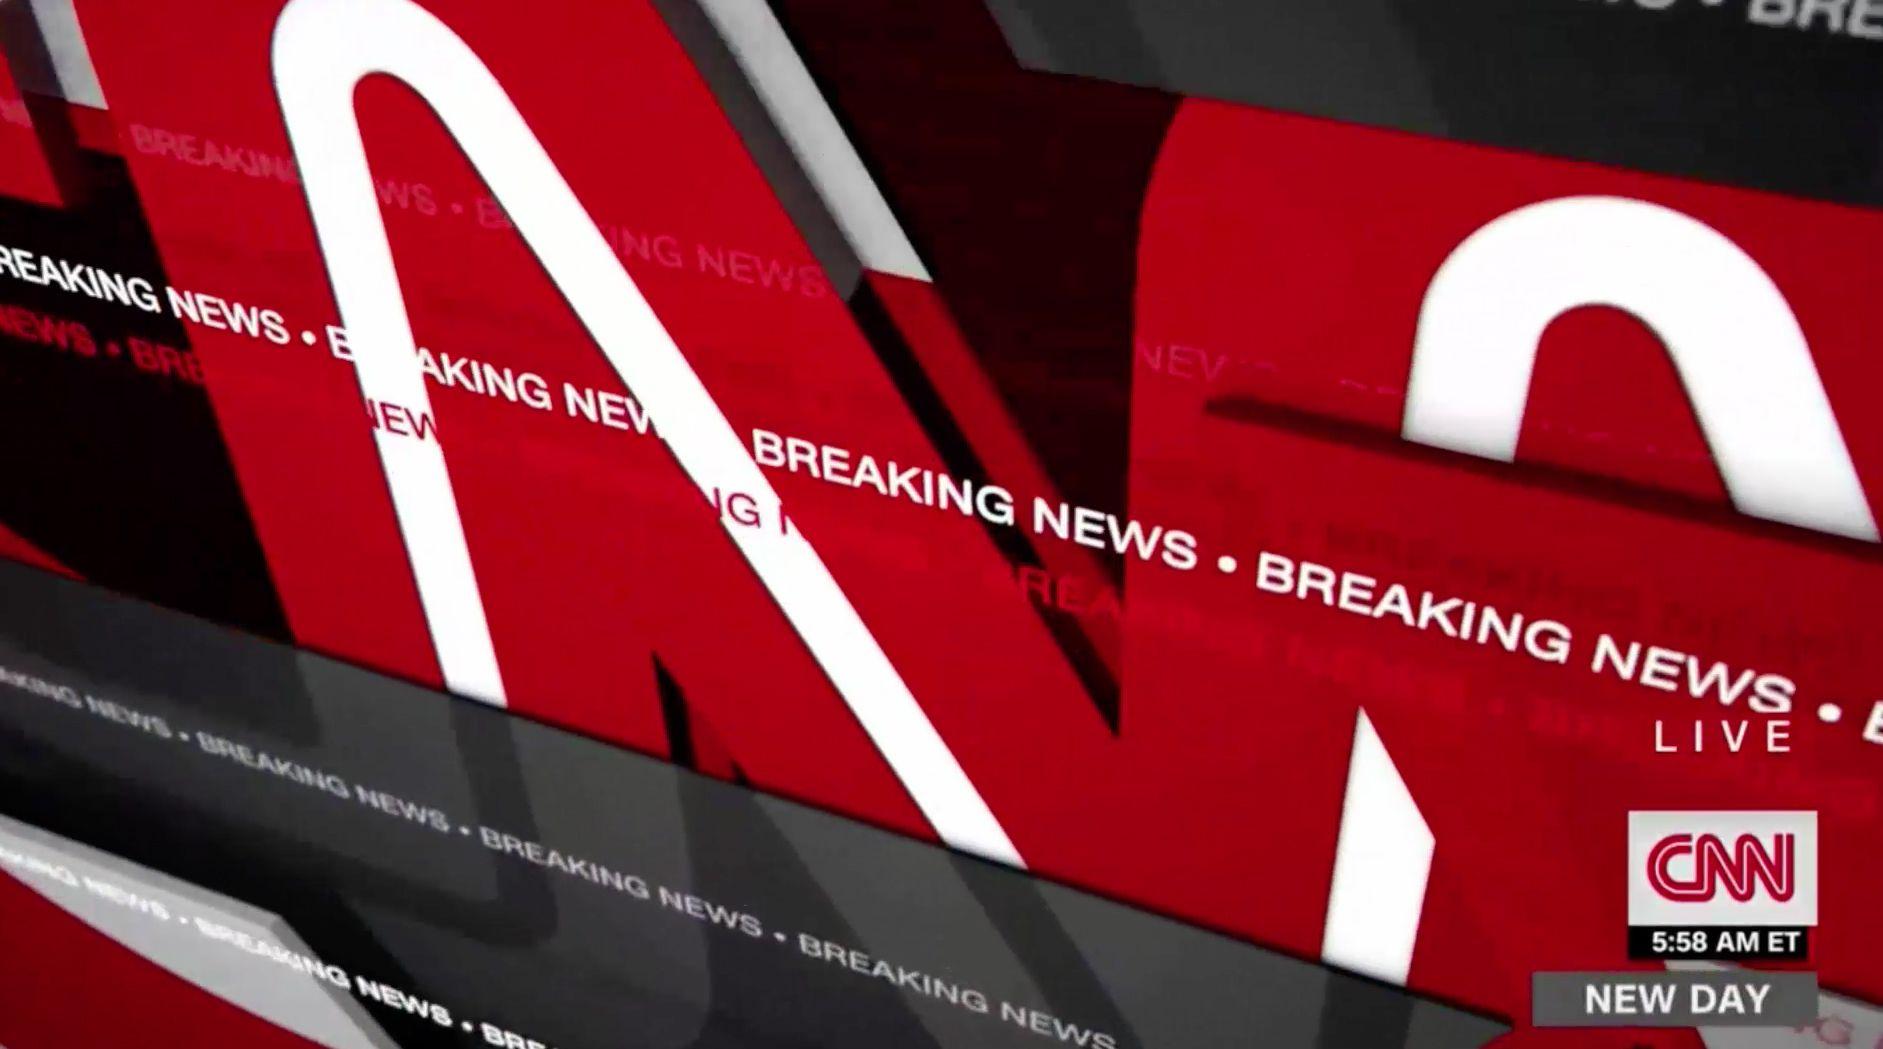 CNN News Logo - CNN gets new breaking news look - NewscastStudio